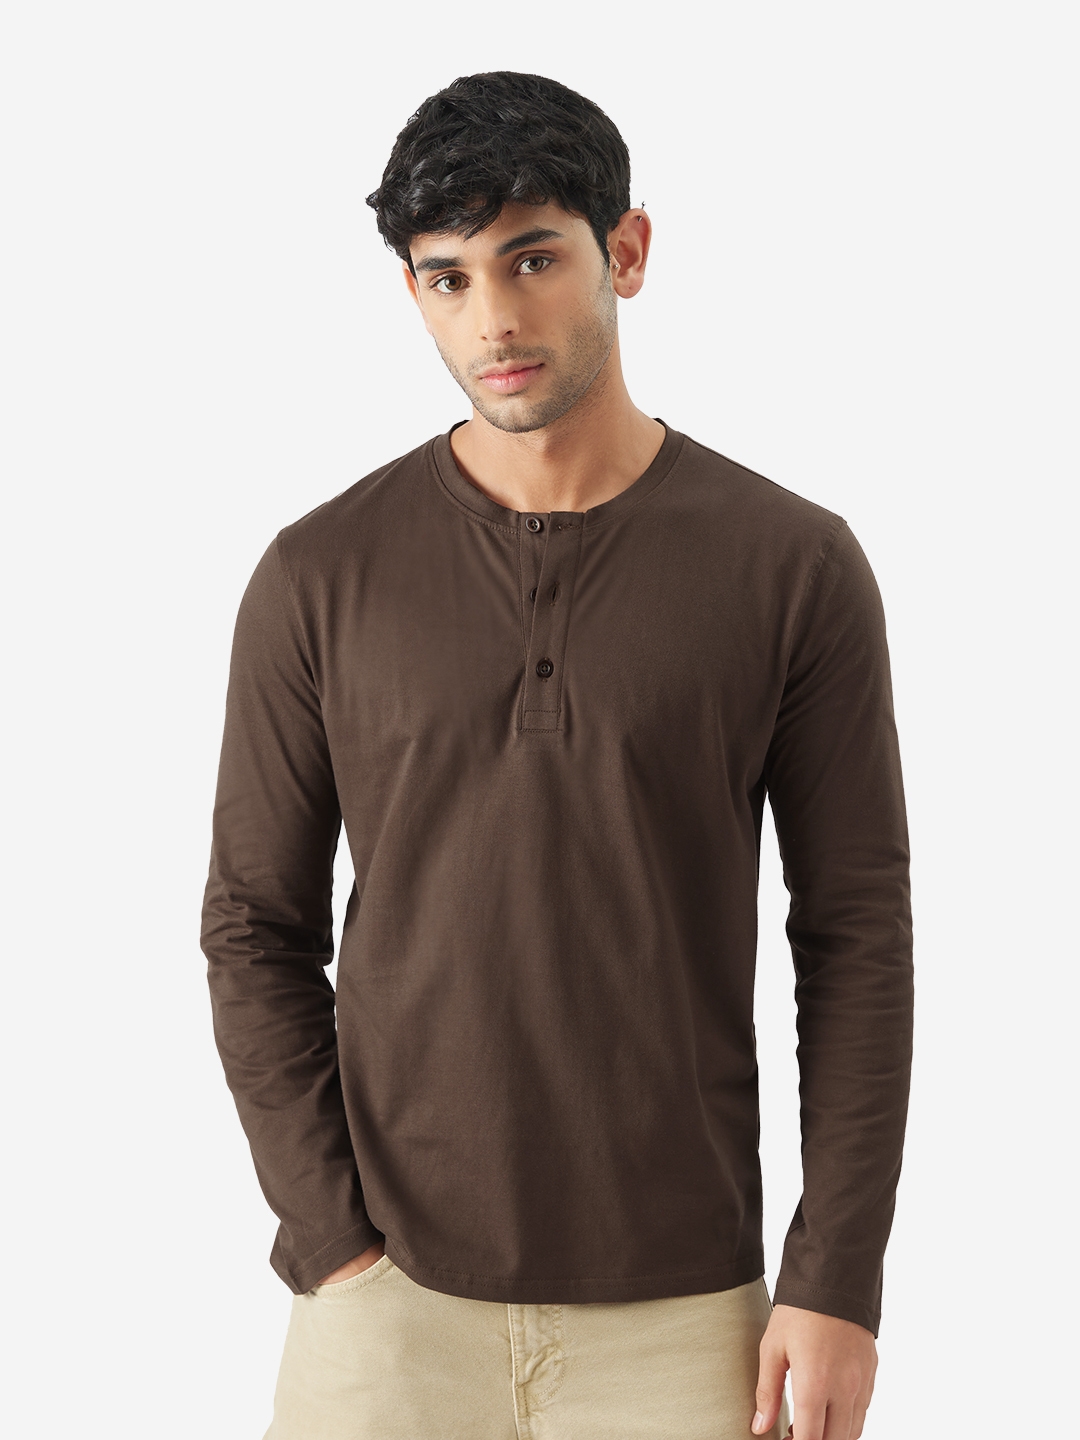 Men's Solids: Chocolate Brown Henley T-Shirt